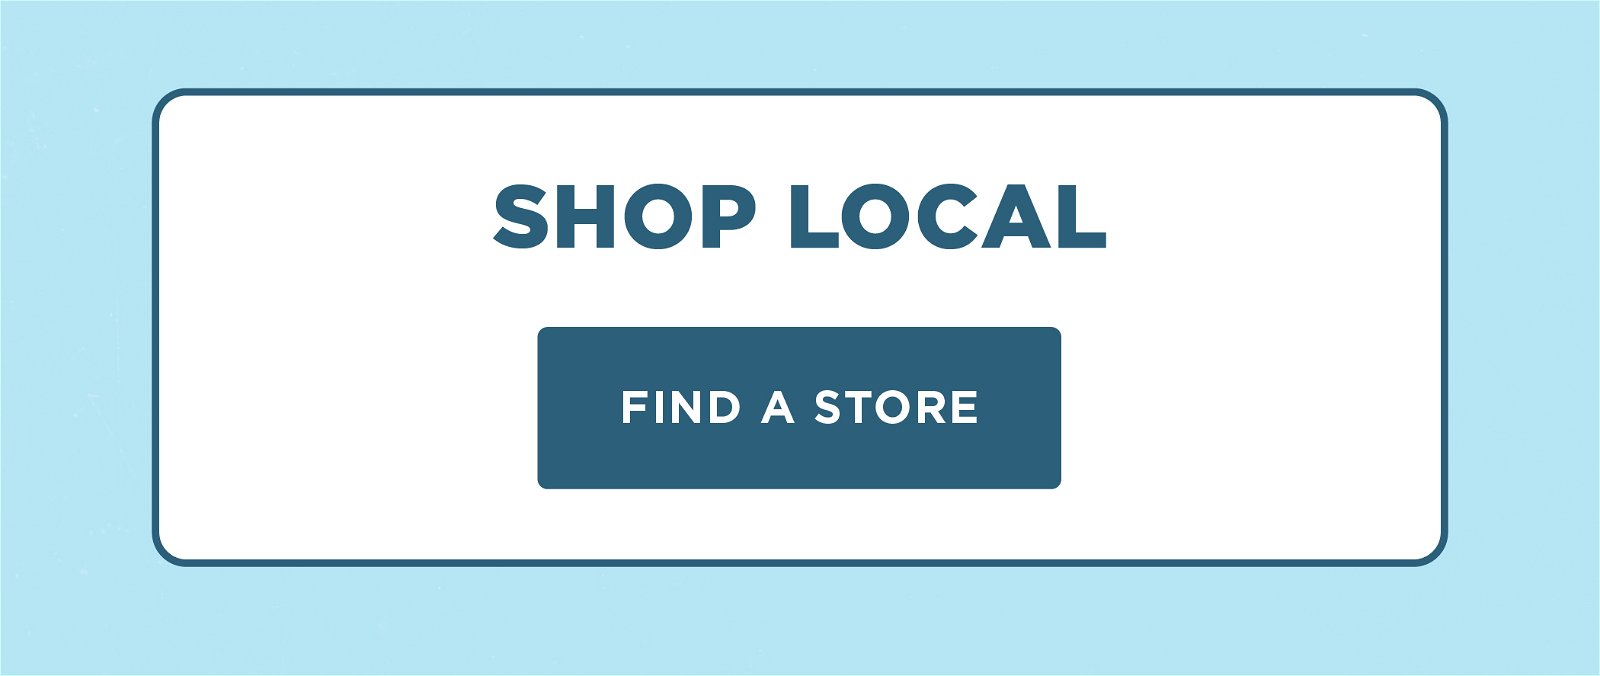 Shop Local  -  Find a Store